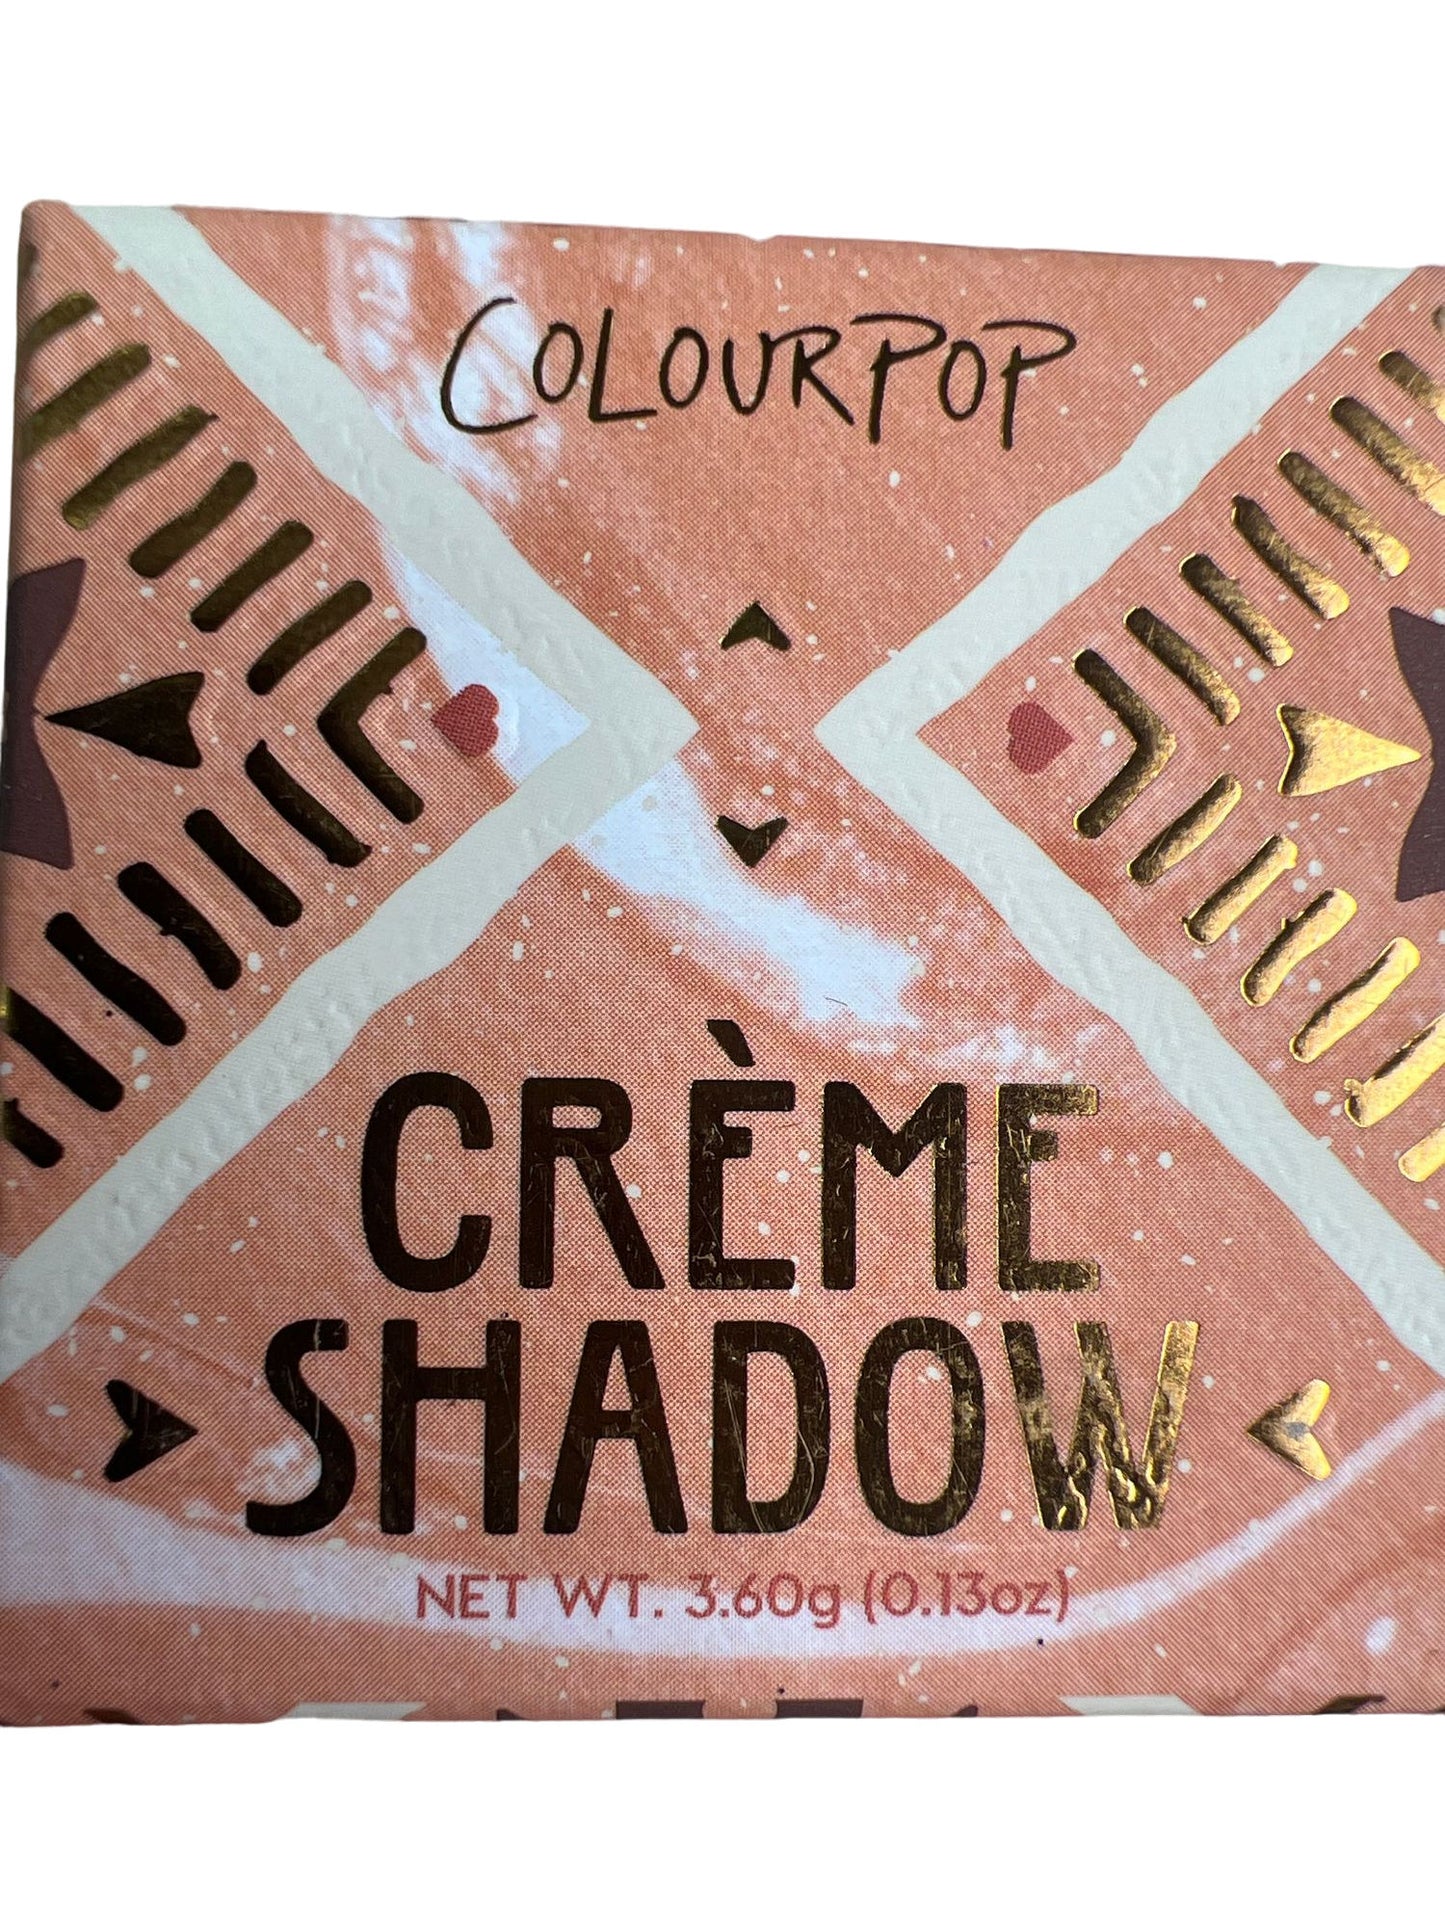 ColourPop Prickly Poppy Creme Eyeshadow 3.6g